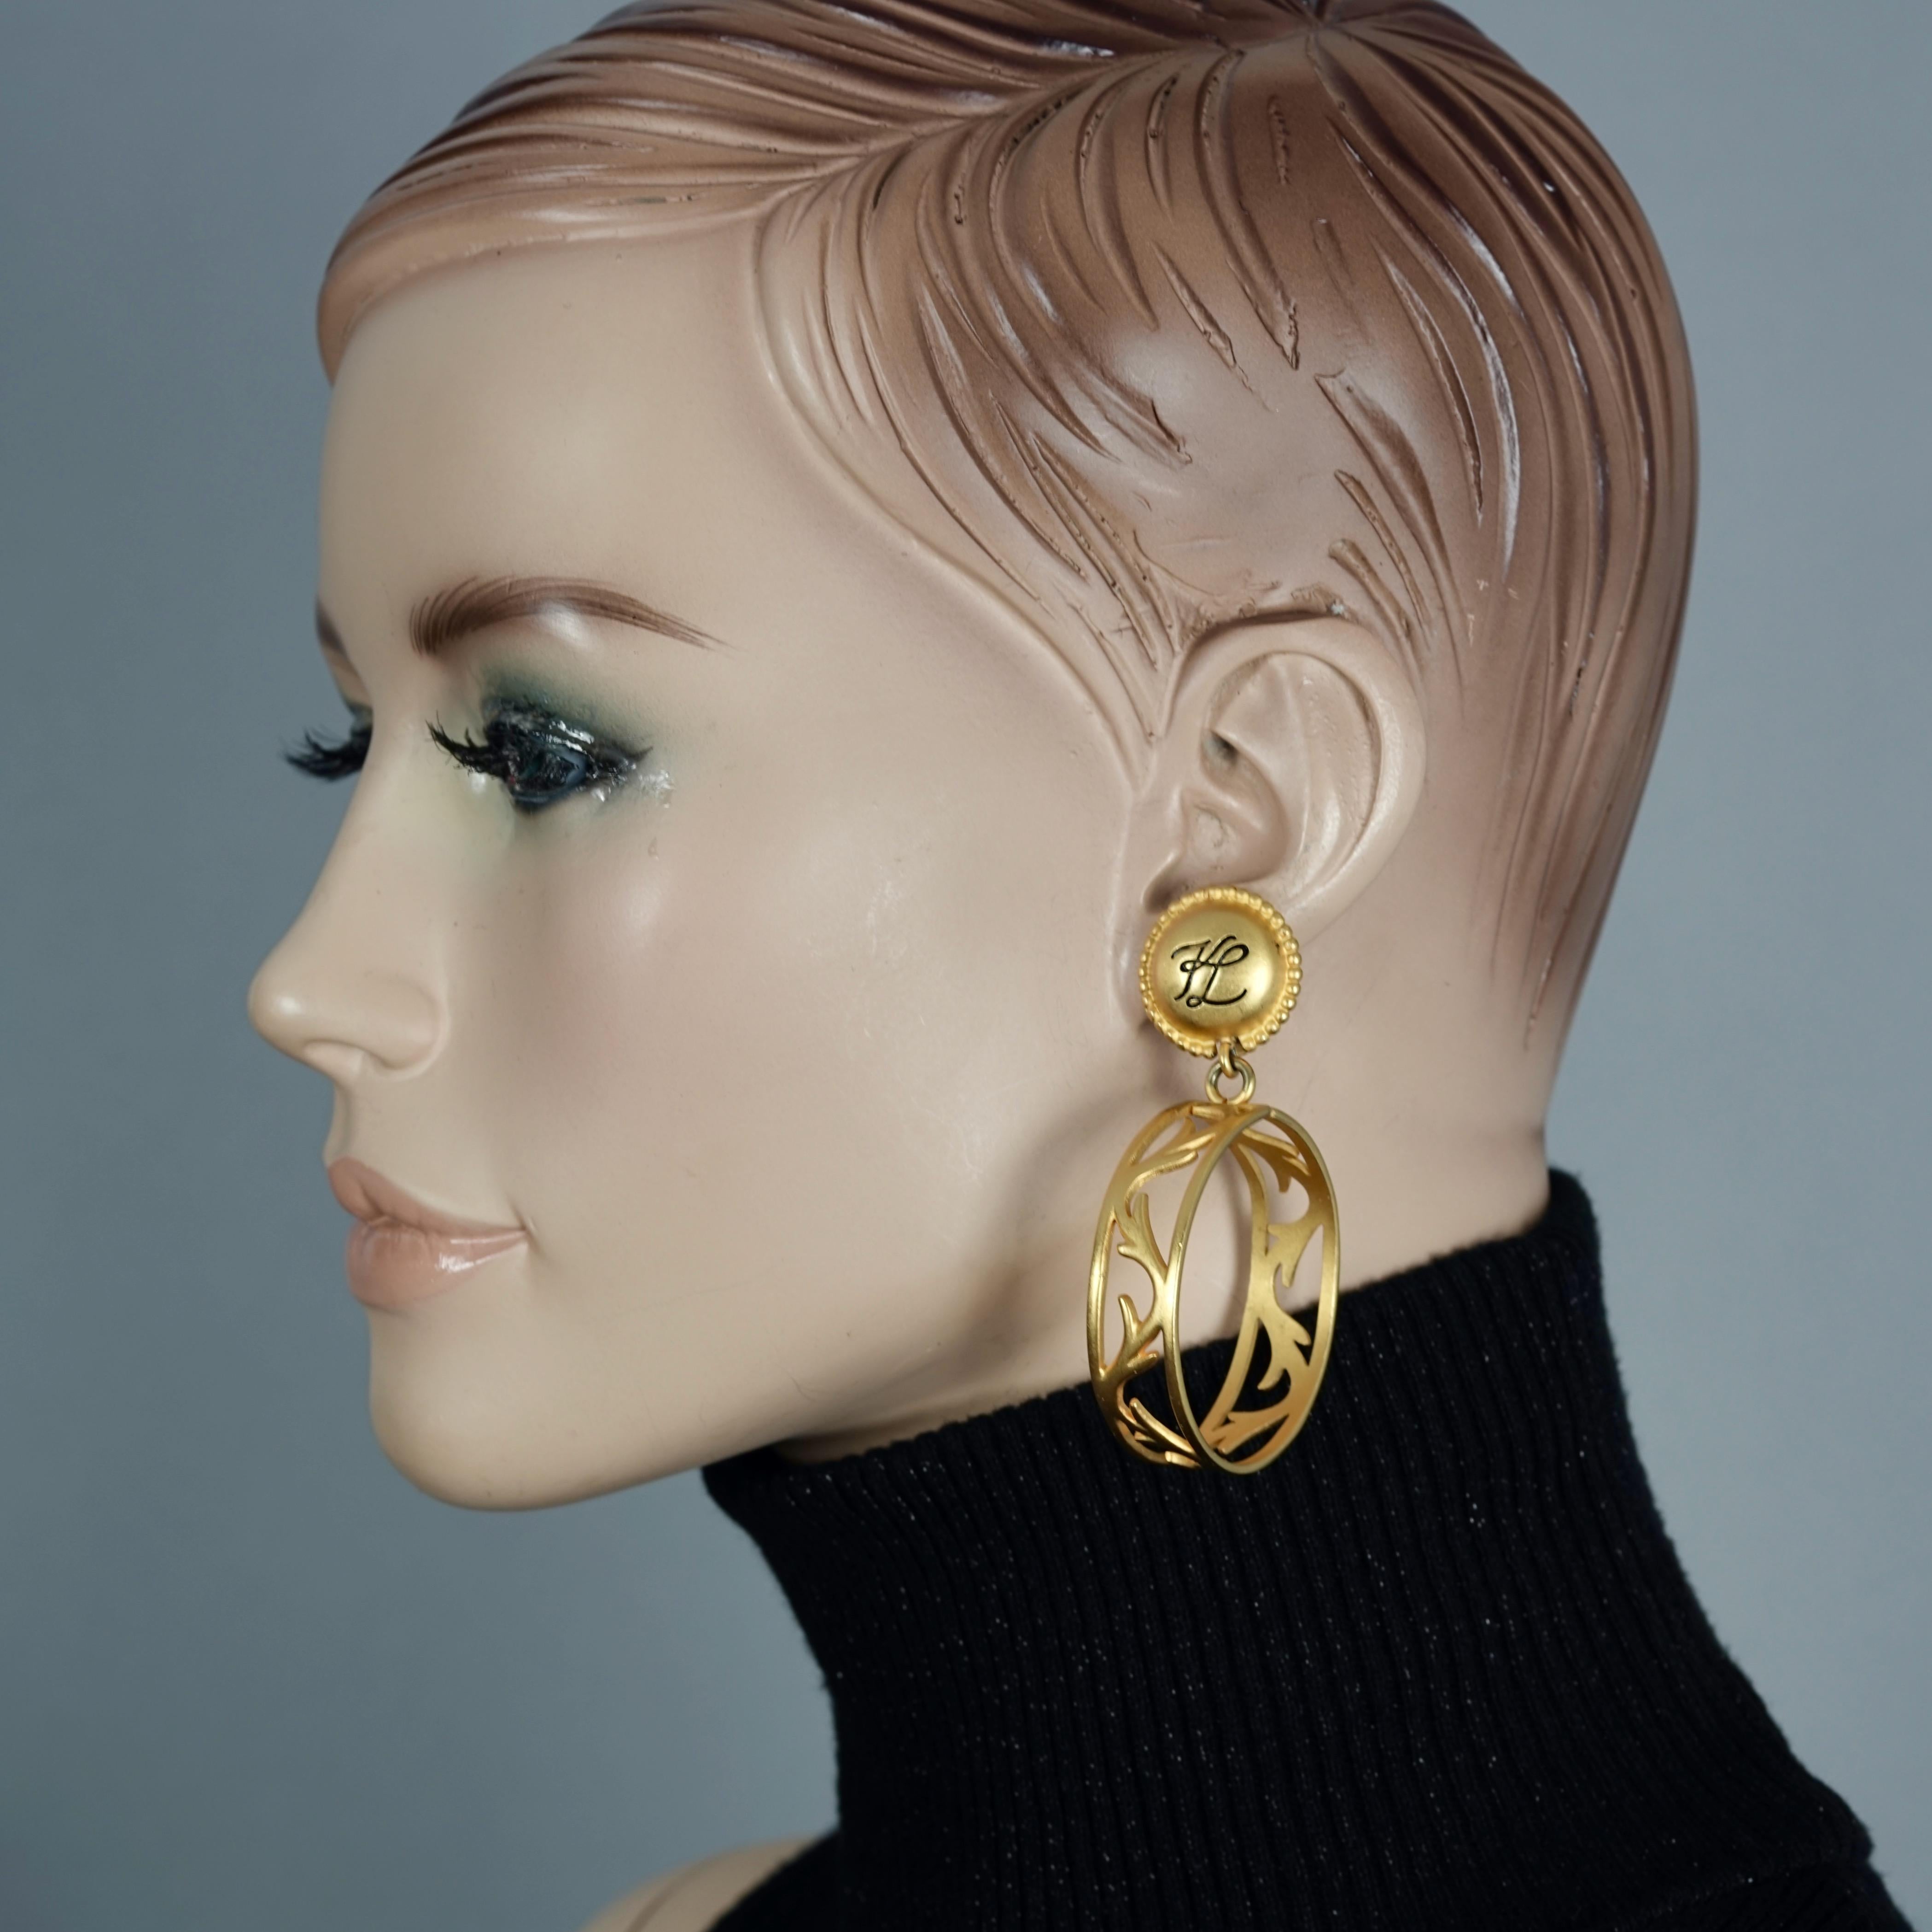 karl lagerfeld safety pin earrings